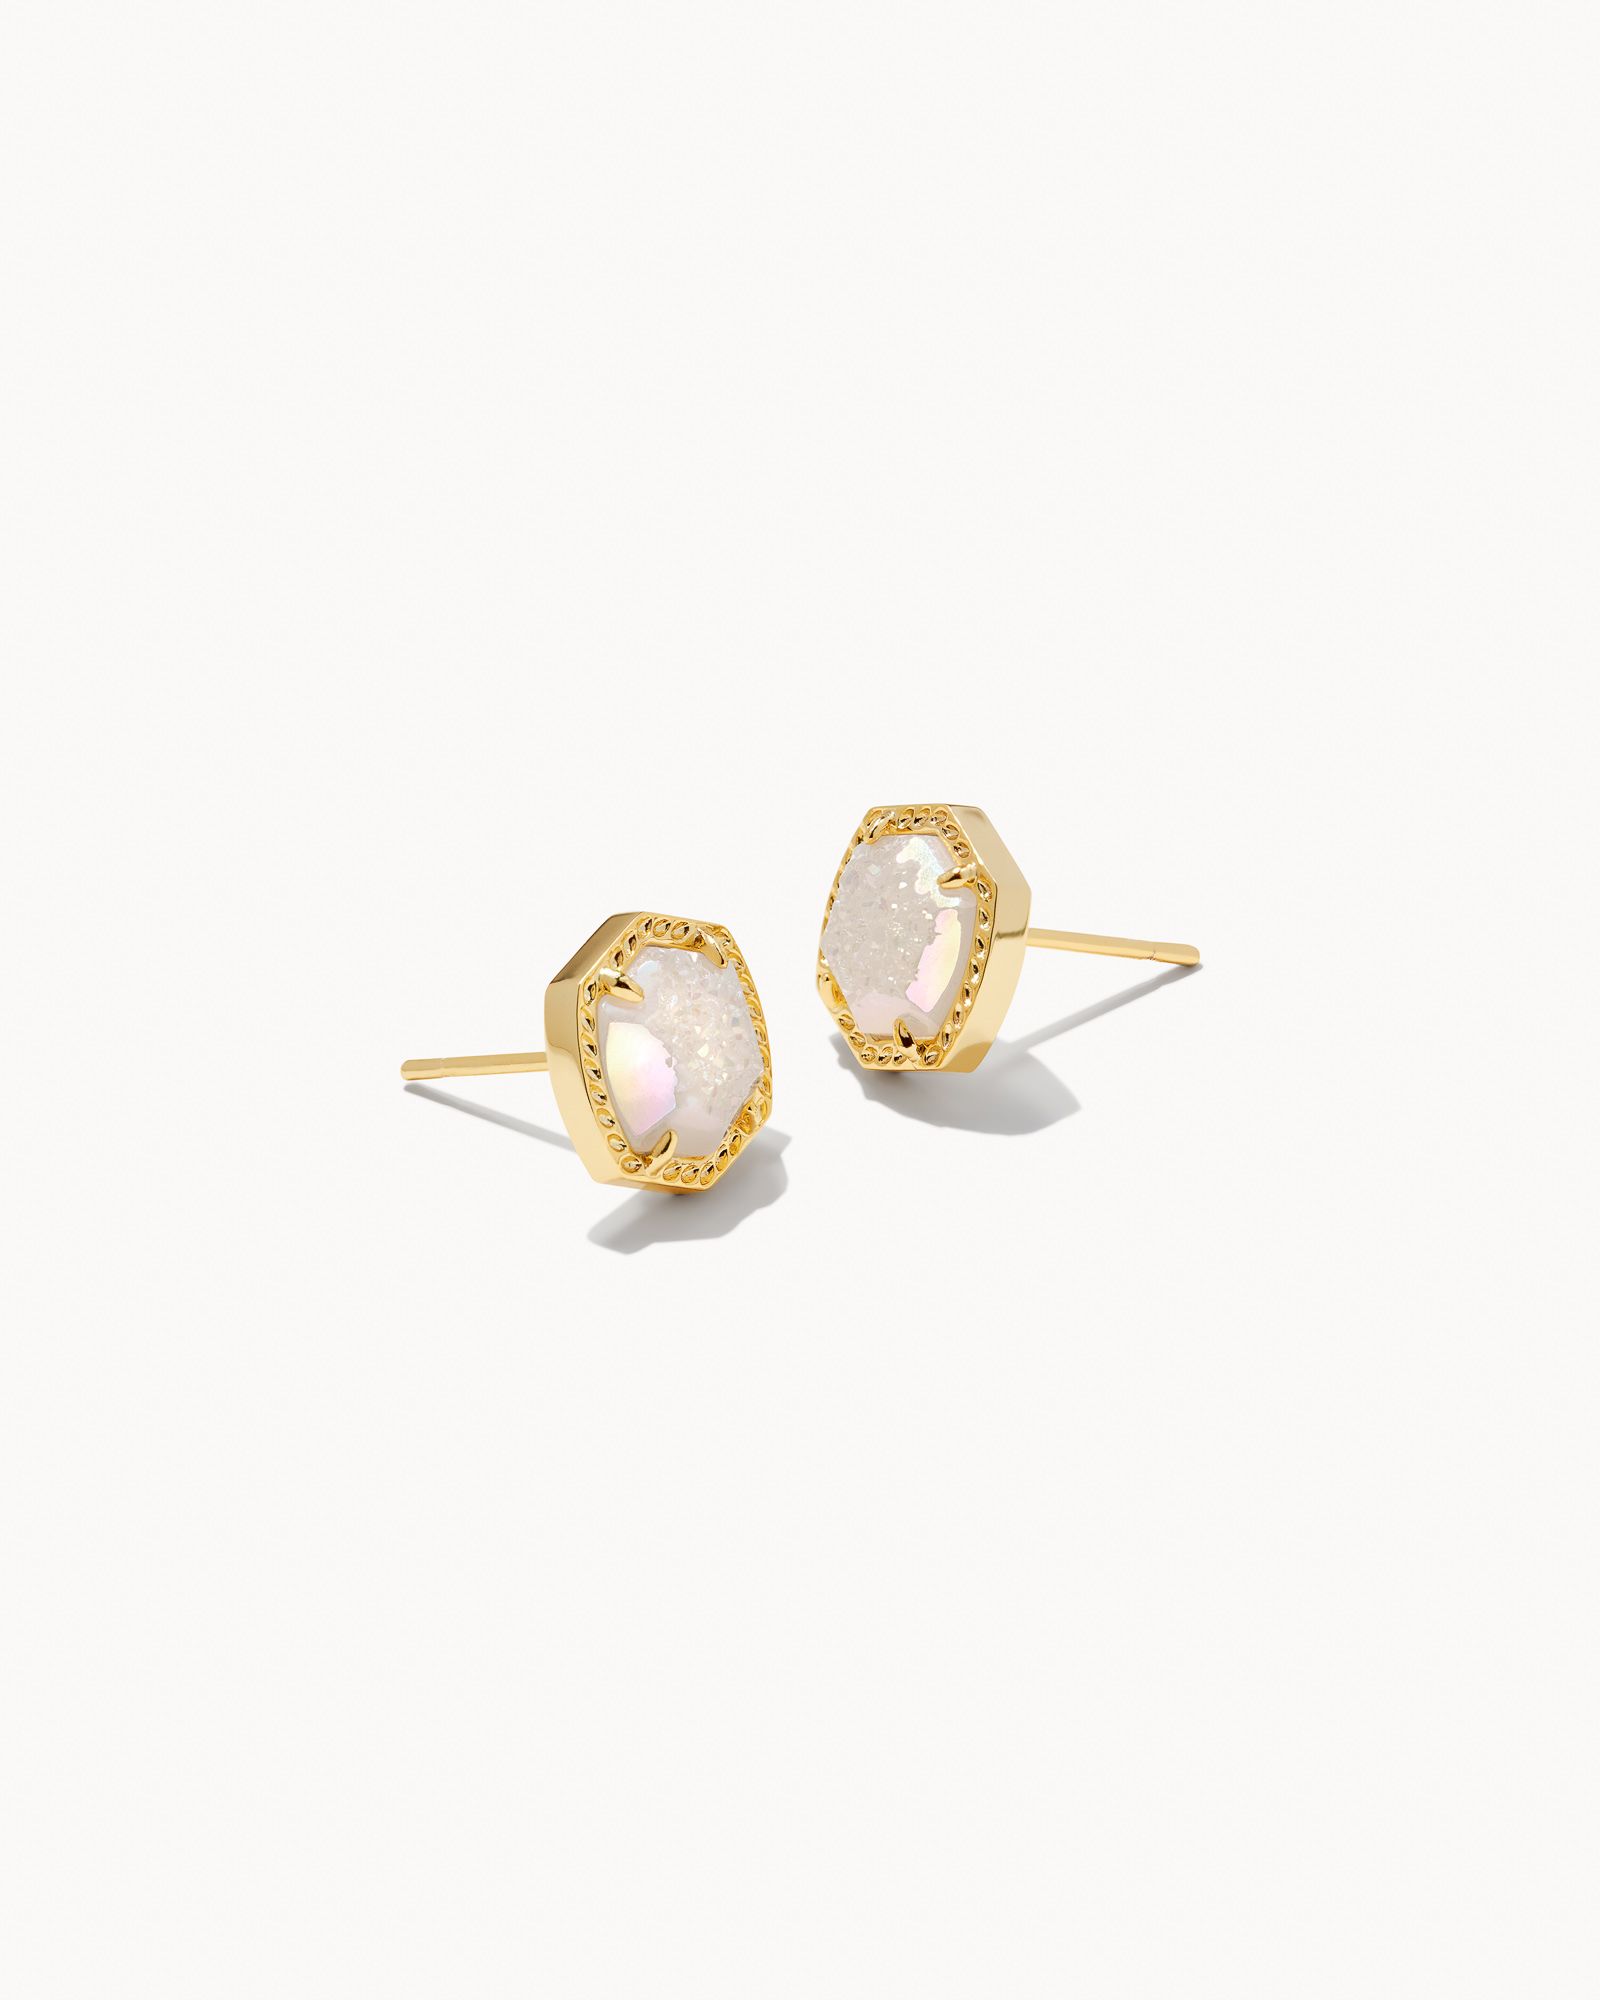 Davie Gold Stud Earrings in Iridescent Drusy | Kendra Scott | Kendra Scott